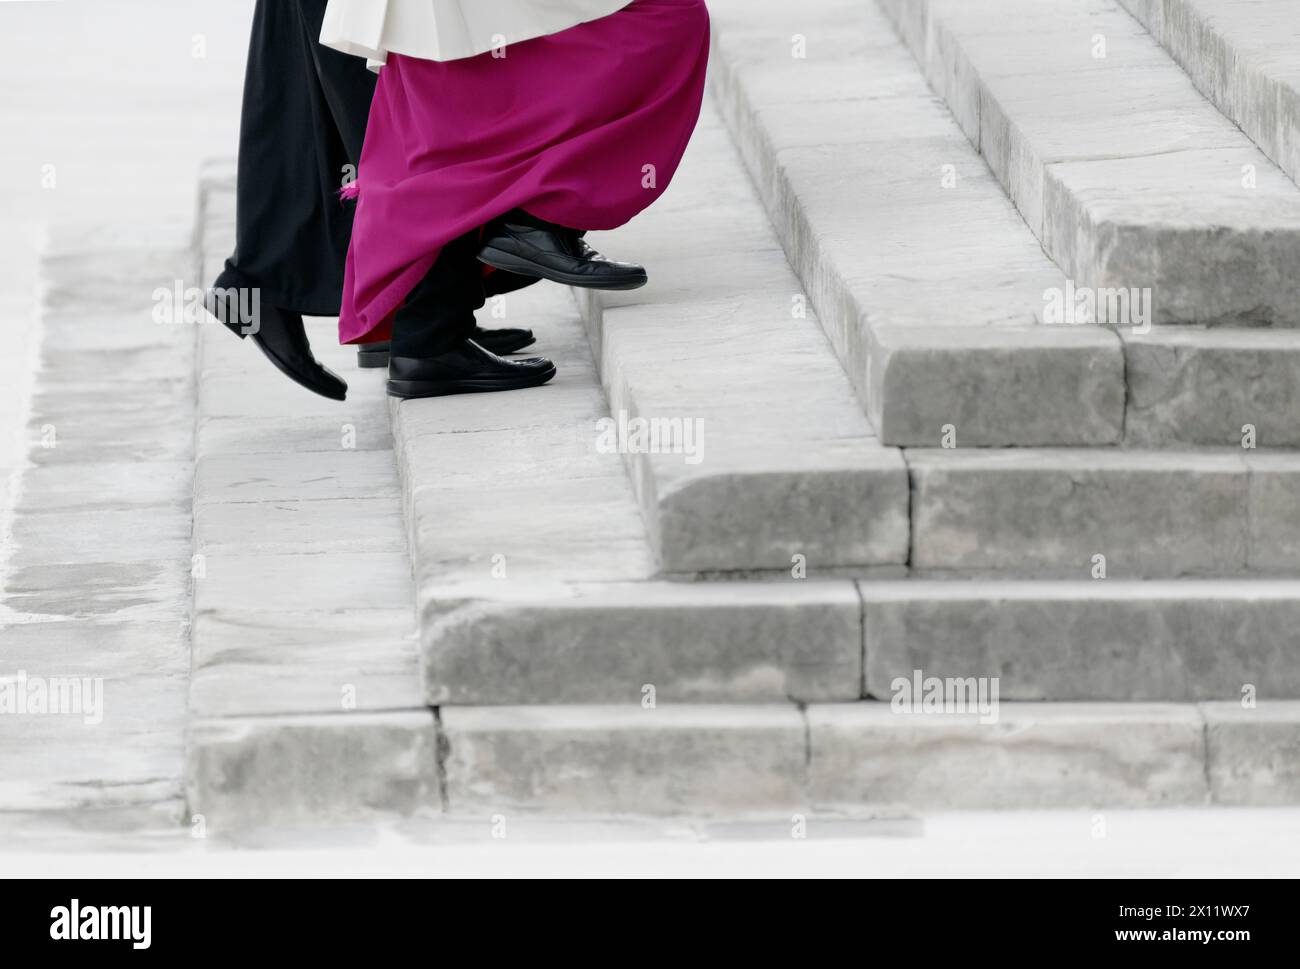 Leute in klerikaler Kleidung, die Treppen klettern Stockfoto